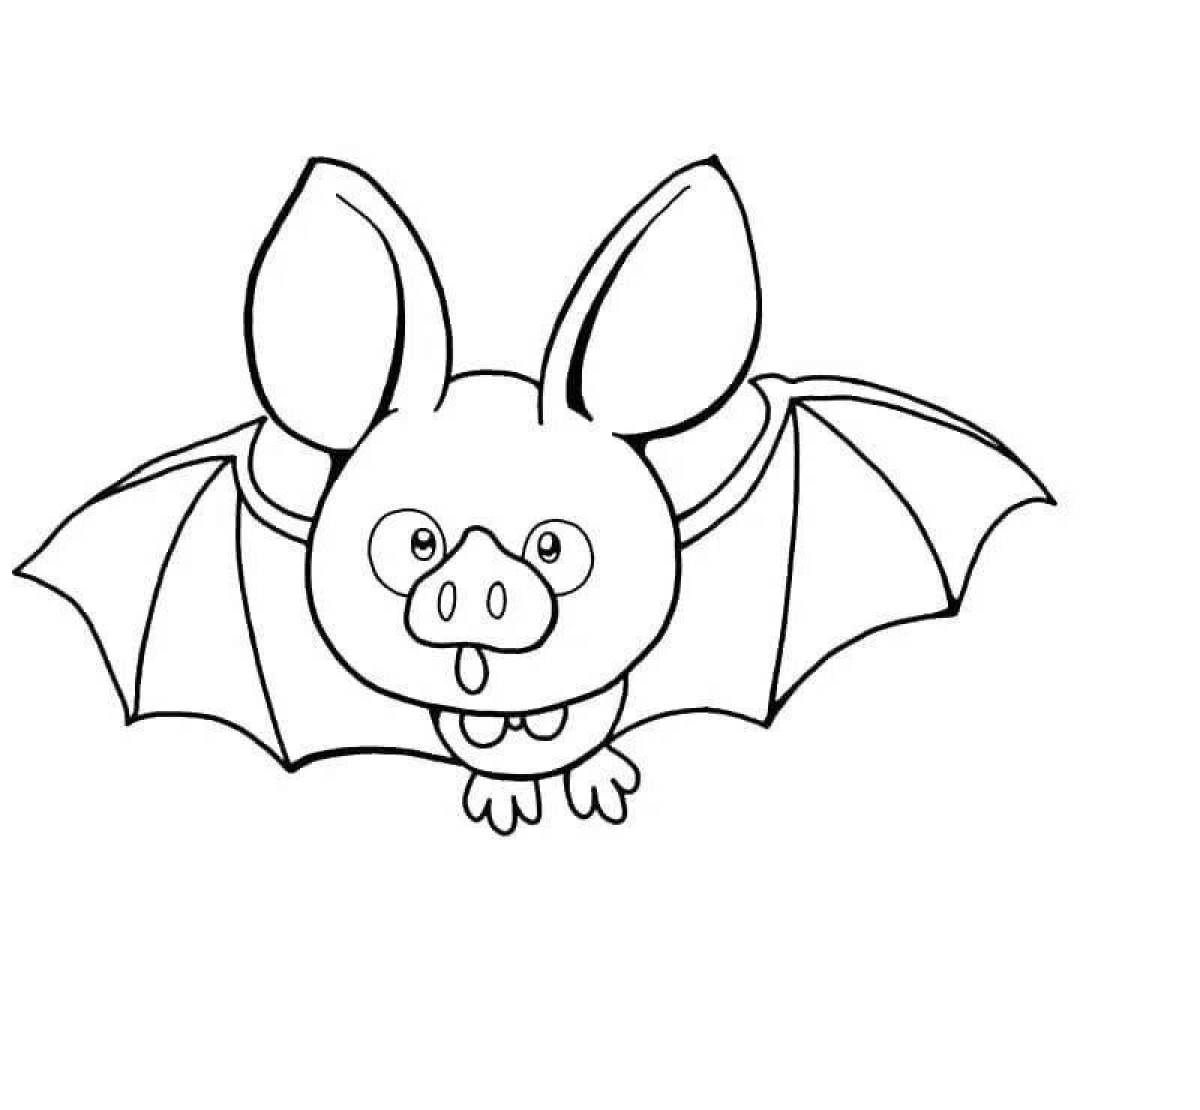 Bat for kids #2